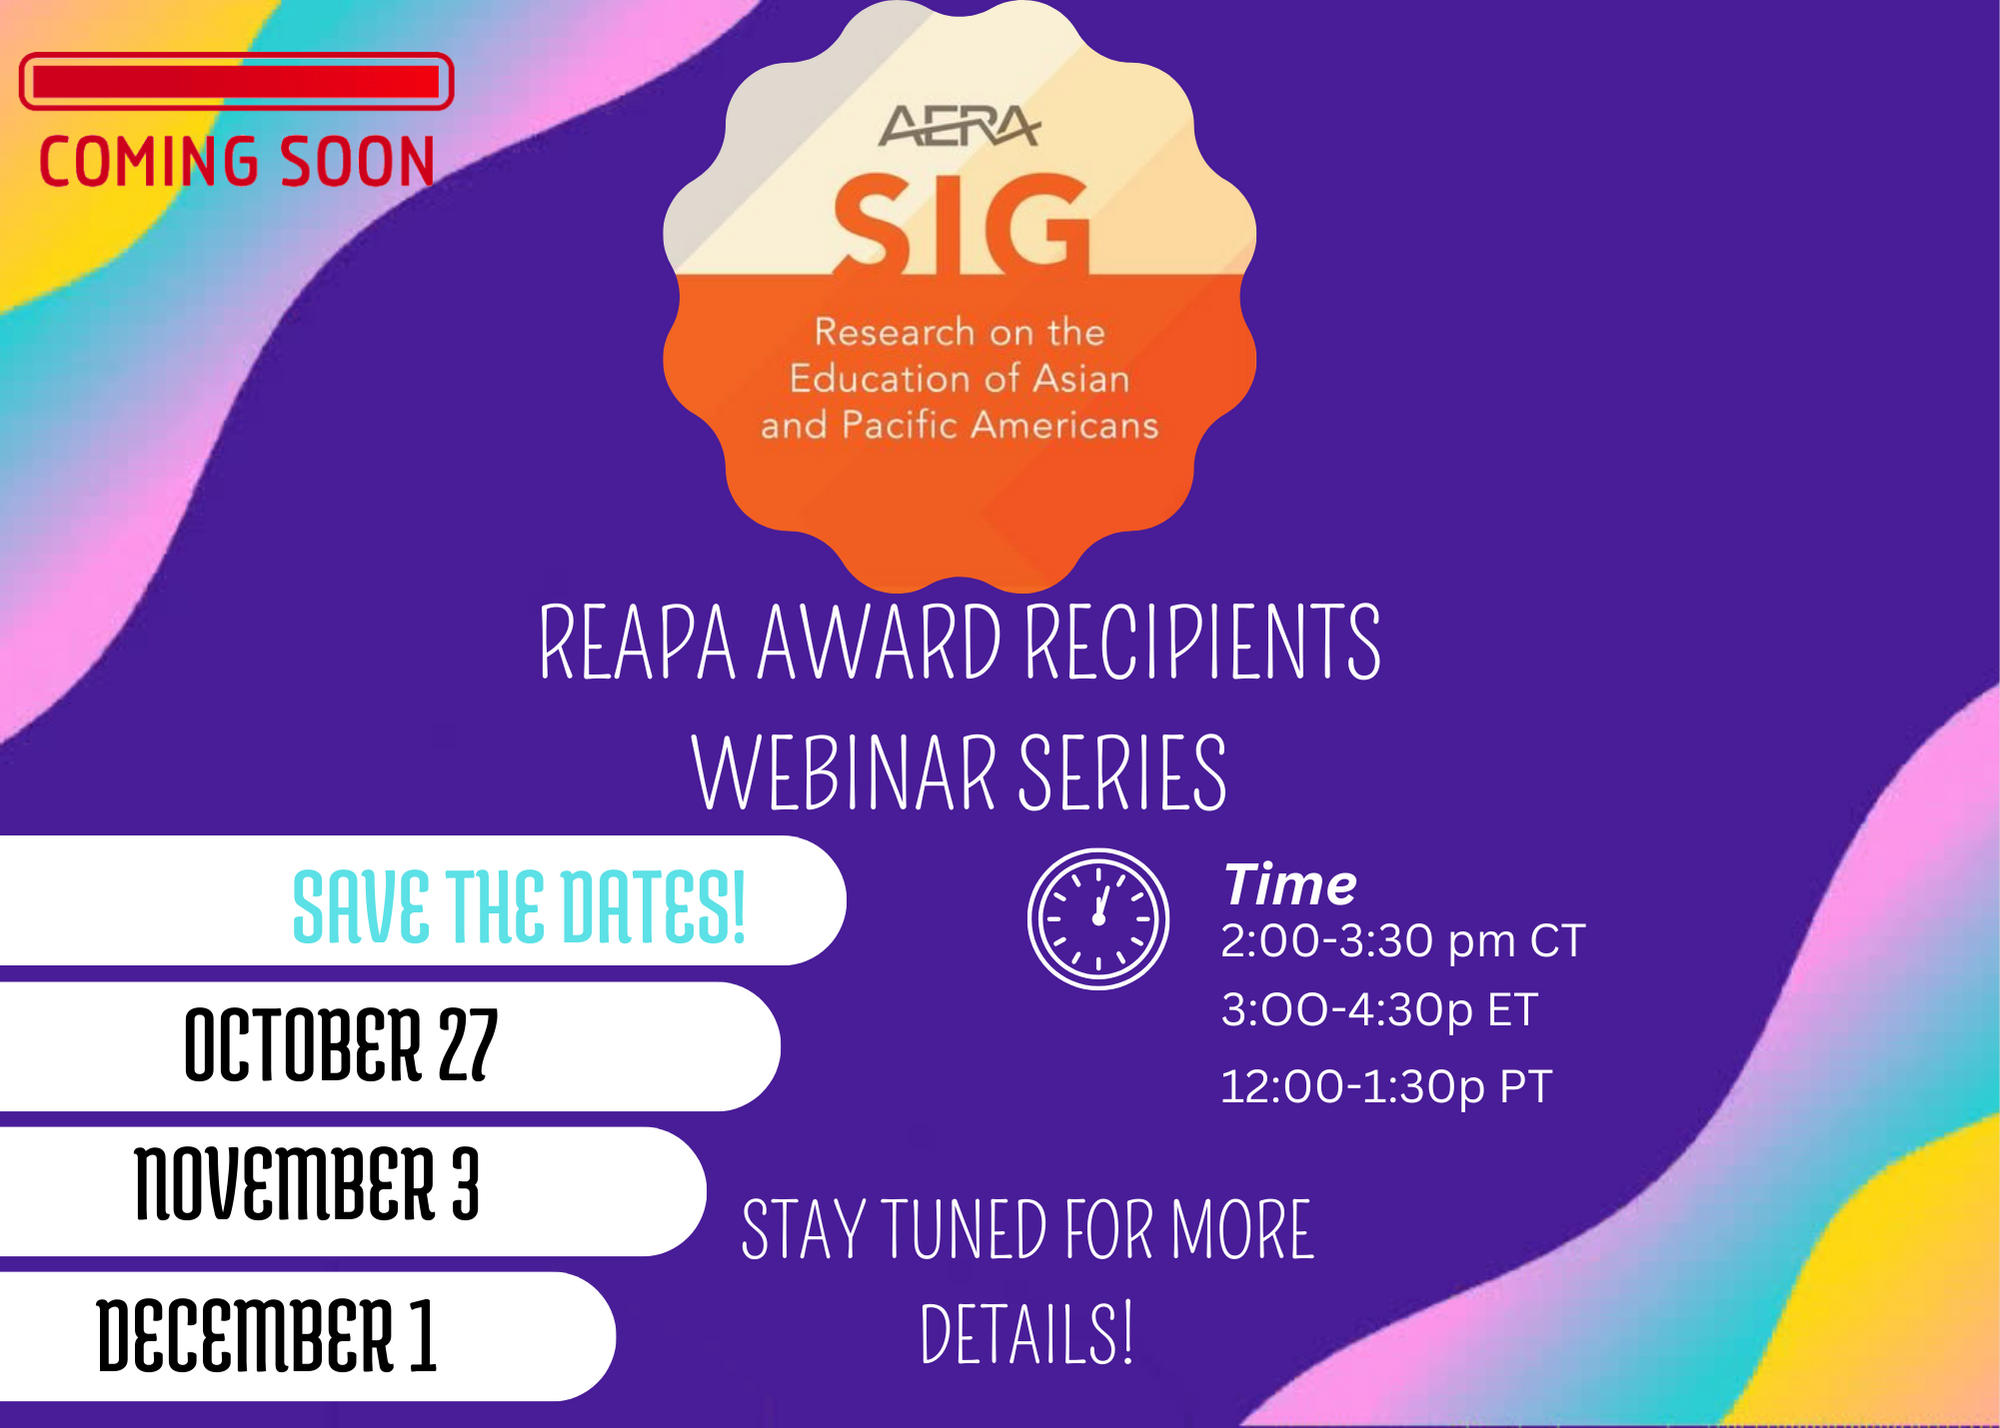 REAPA Award Recipients Webinar Series